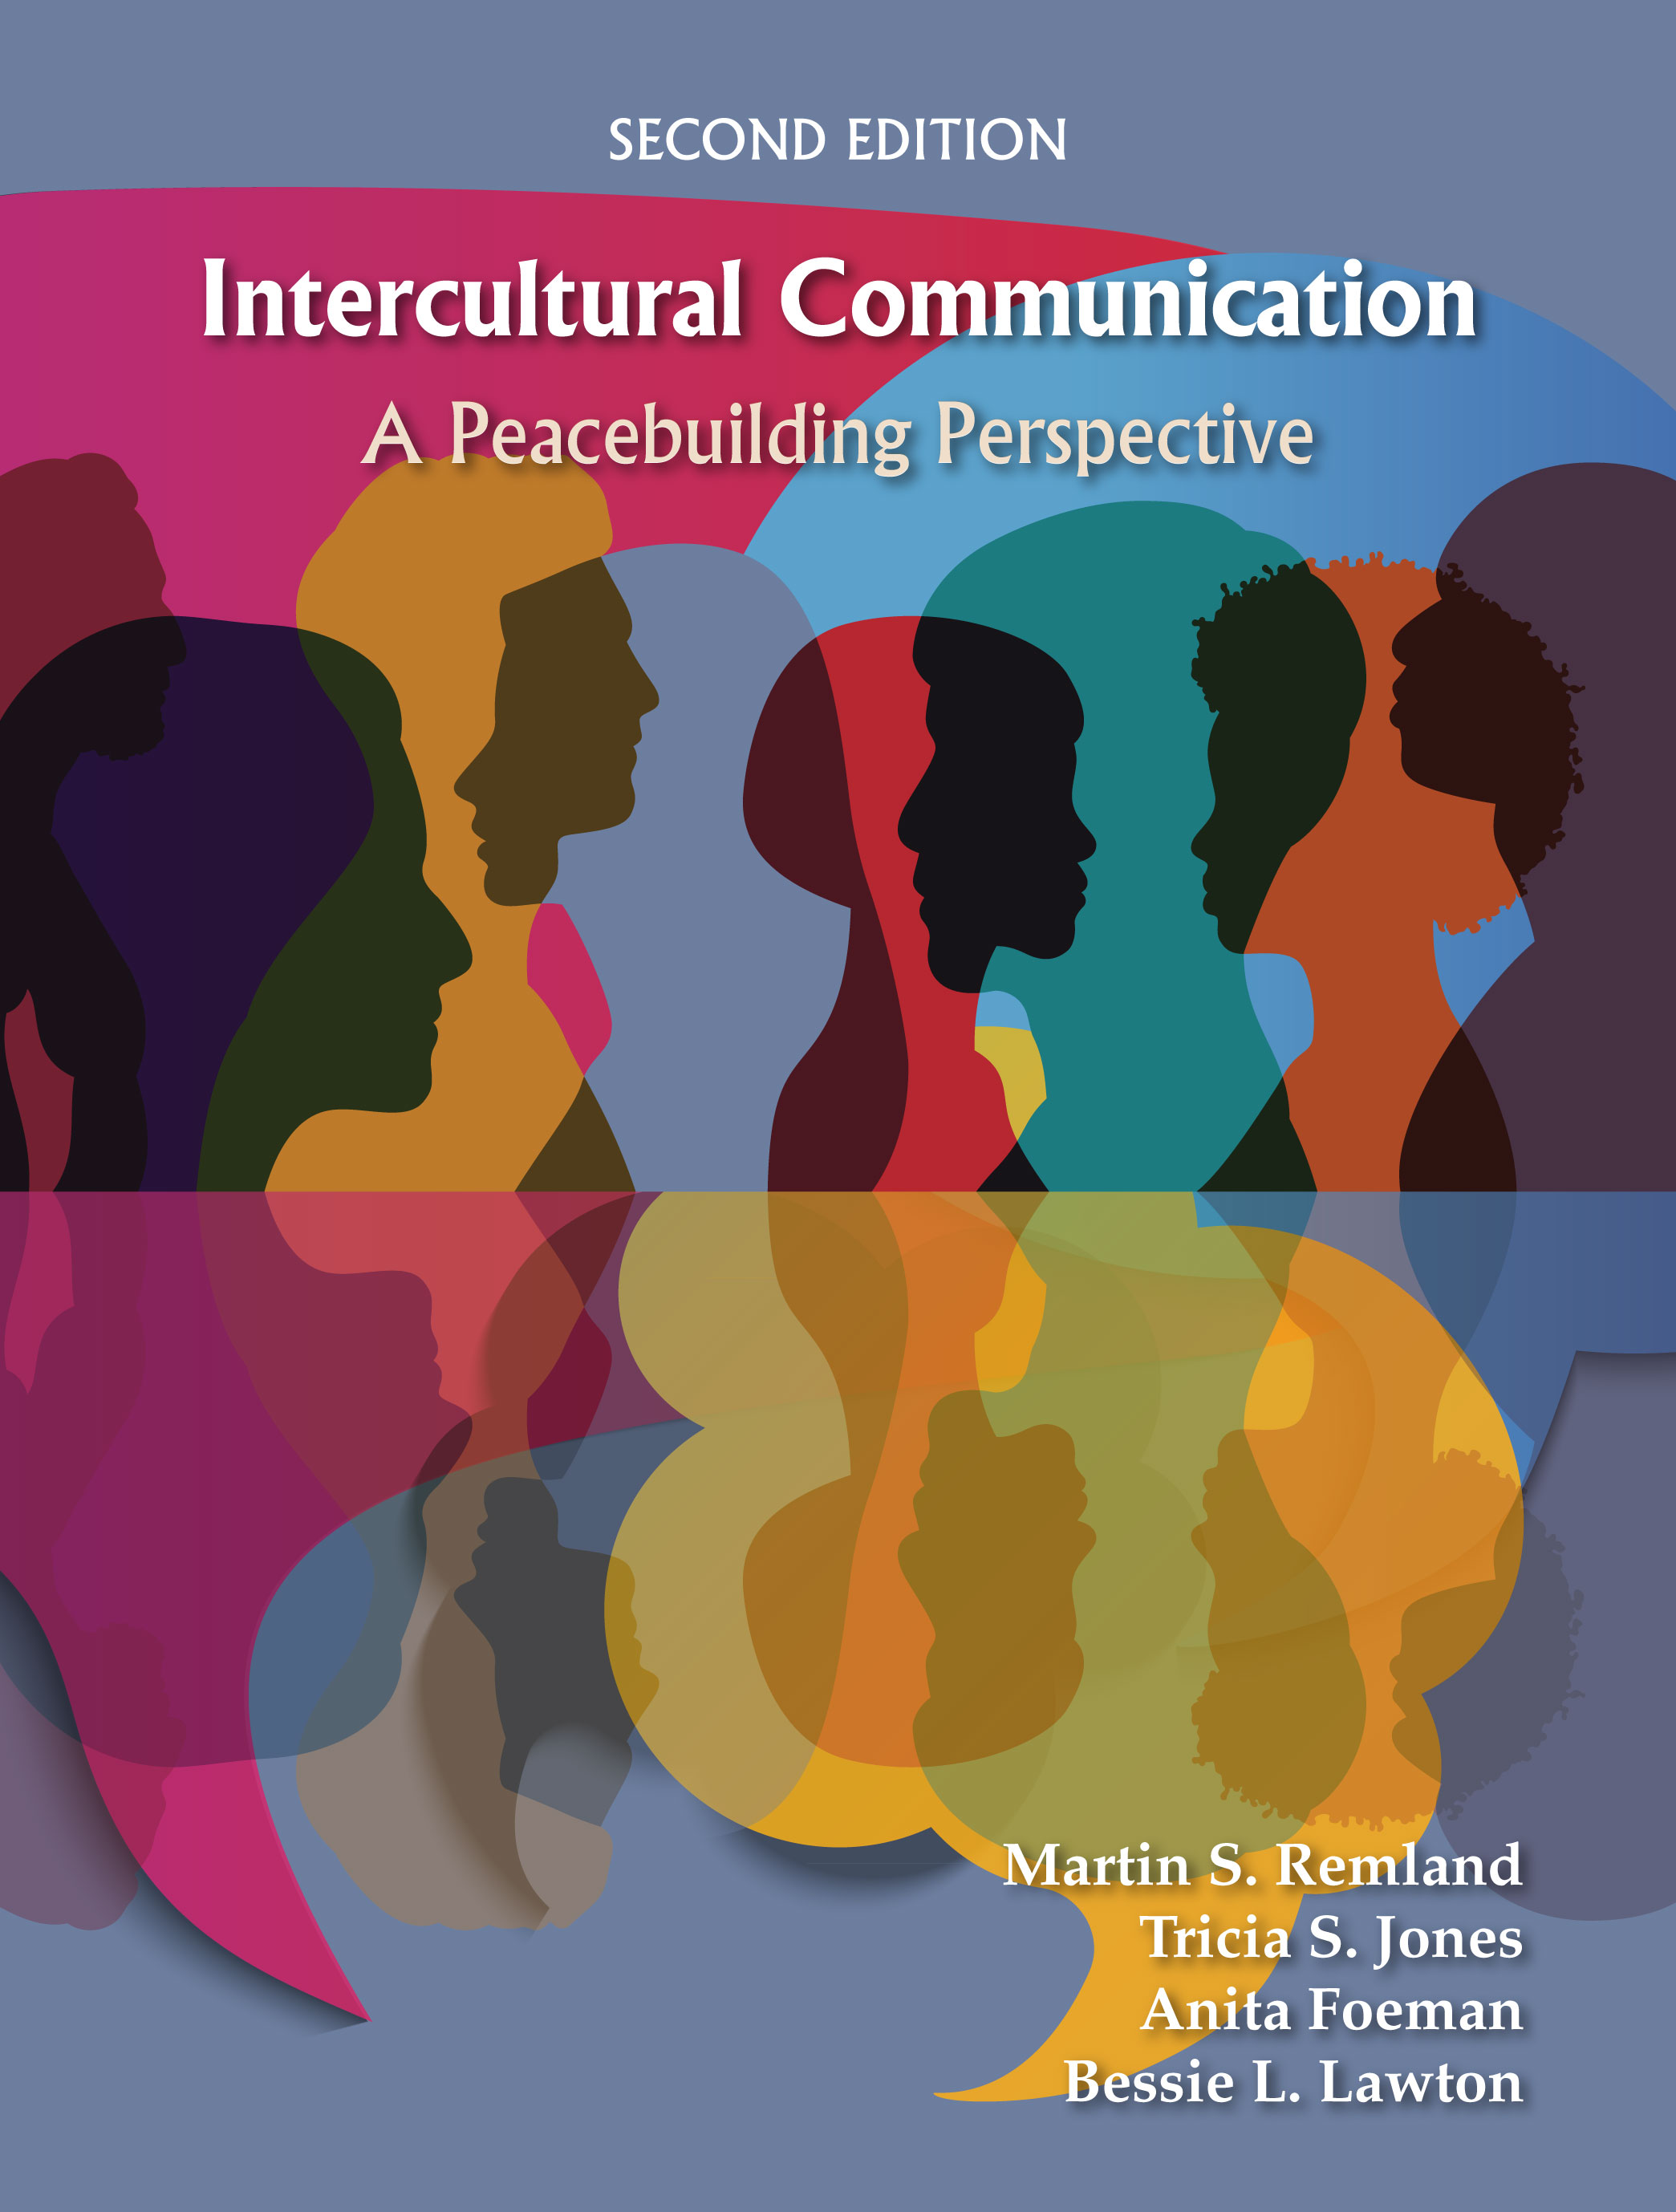 Intercultural Communication: A Peacebuilding Perspective by Martin S. Remland, Tricia S. Jones, Anita  Foeman, Bessie L. Lawton